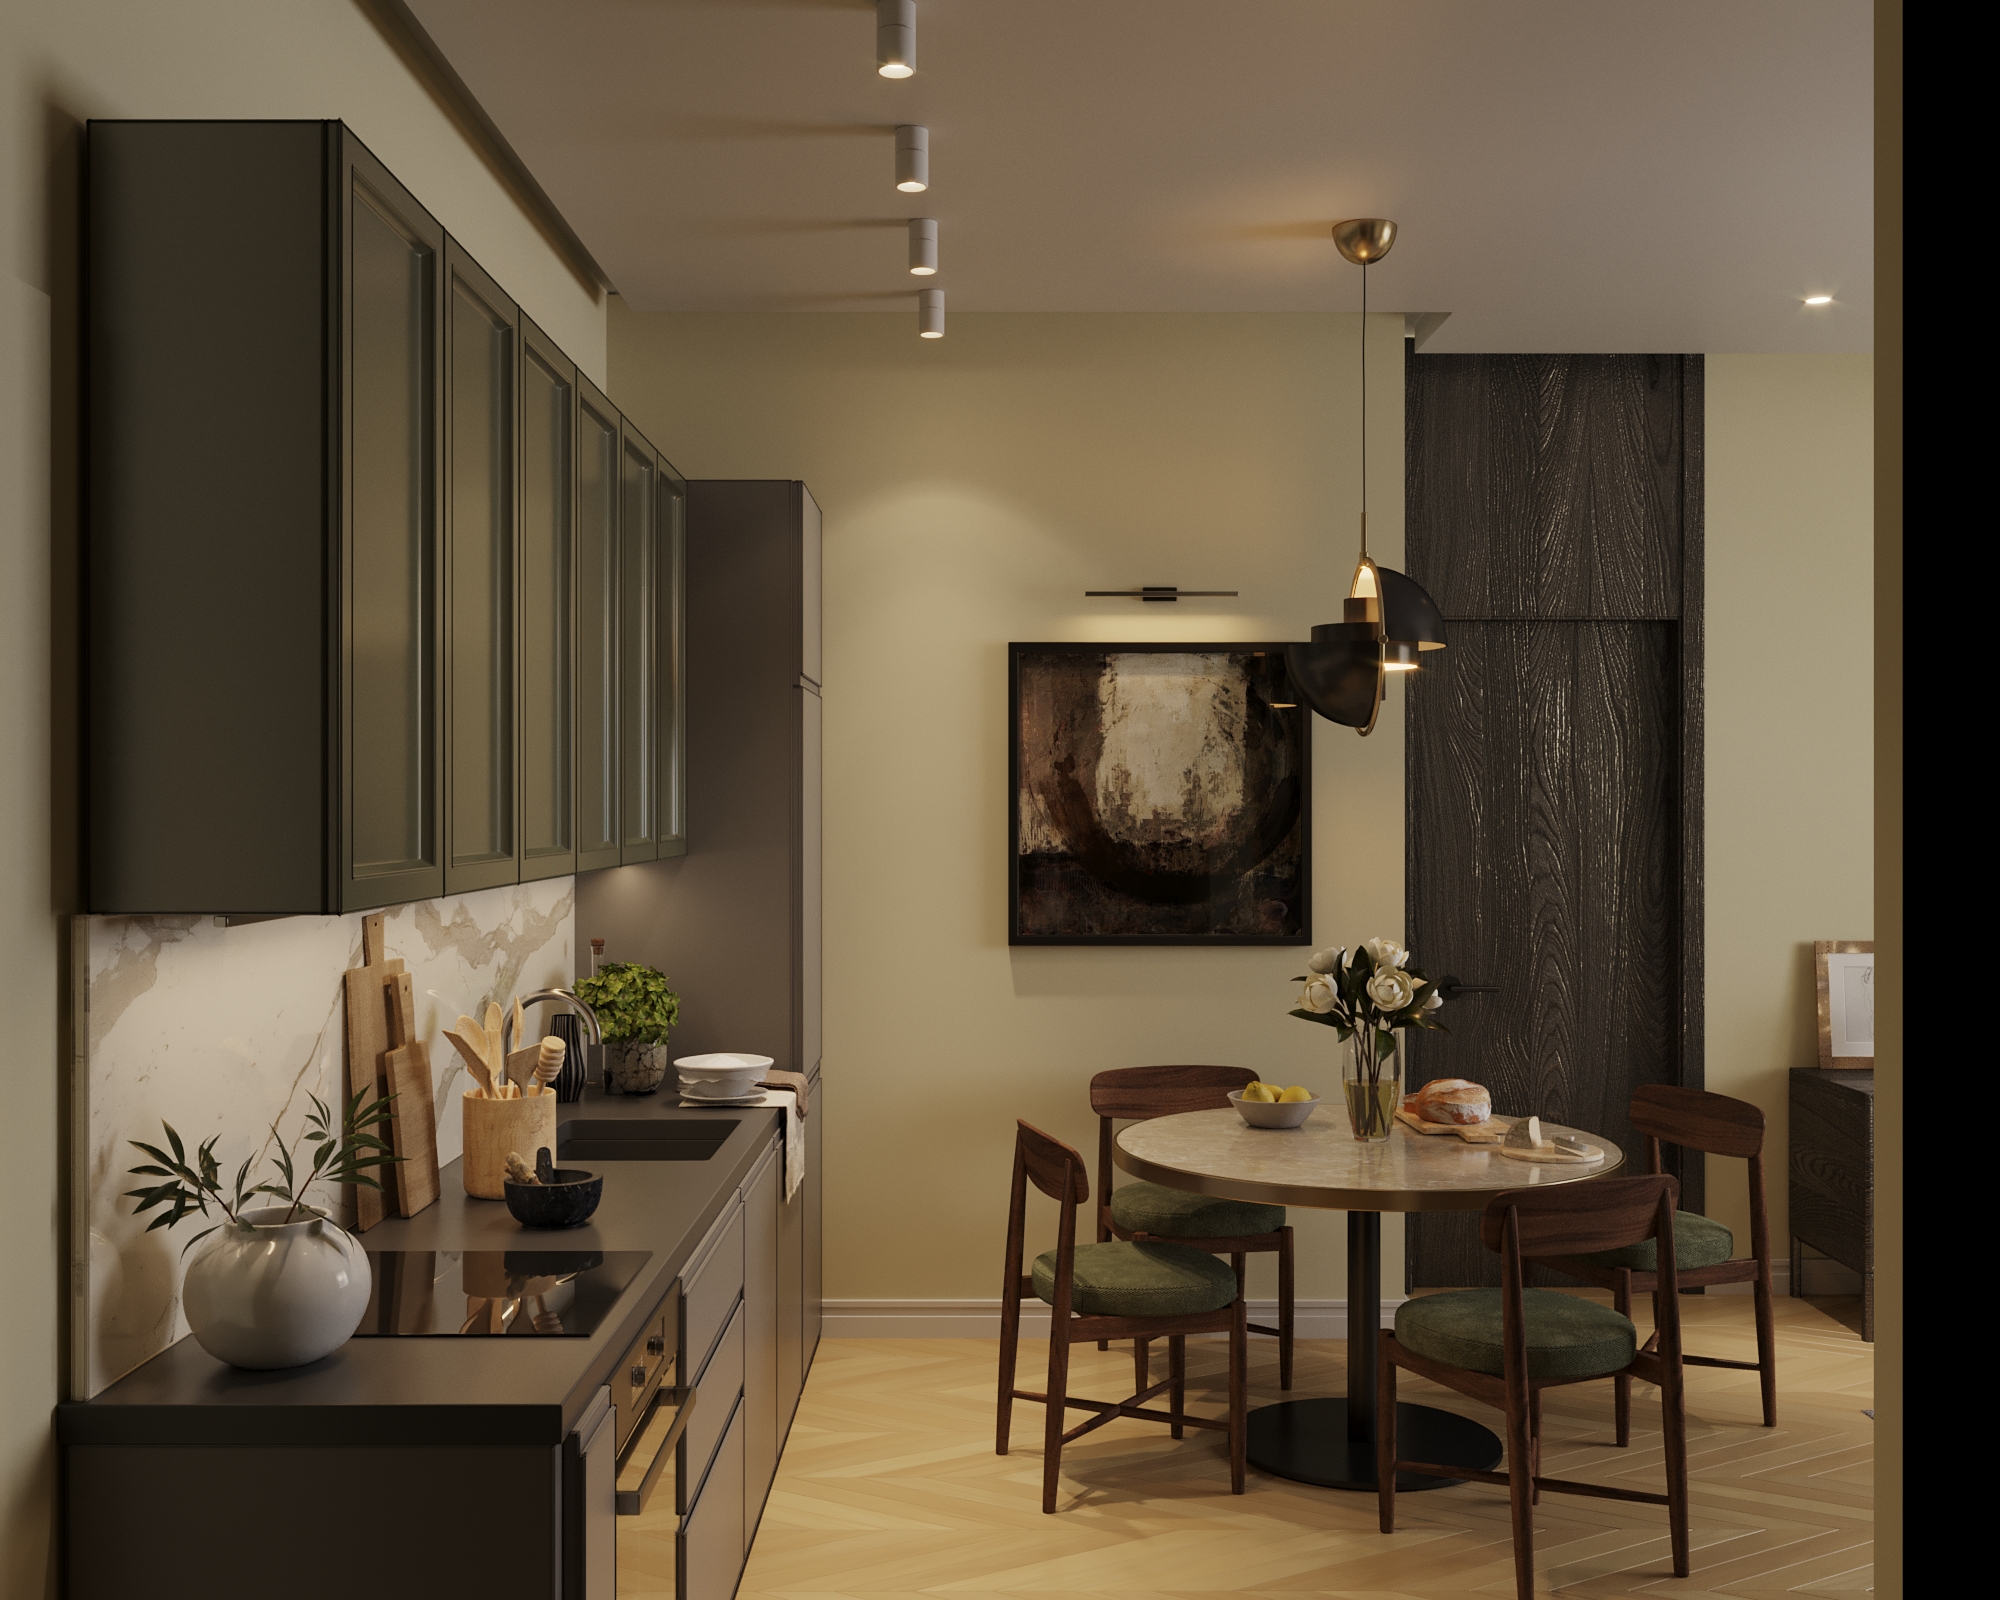 Kitchen hallway in 3d max corona render image